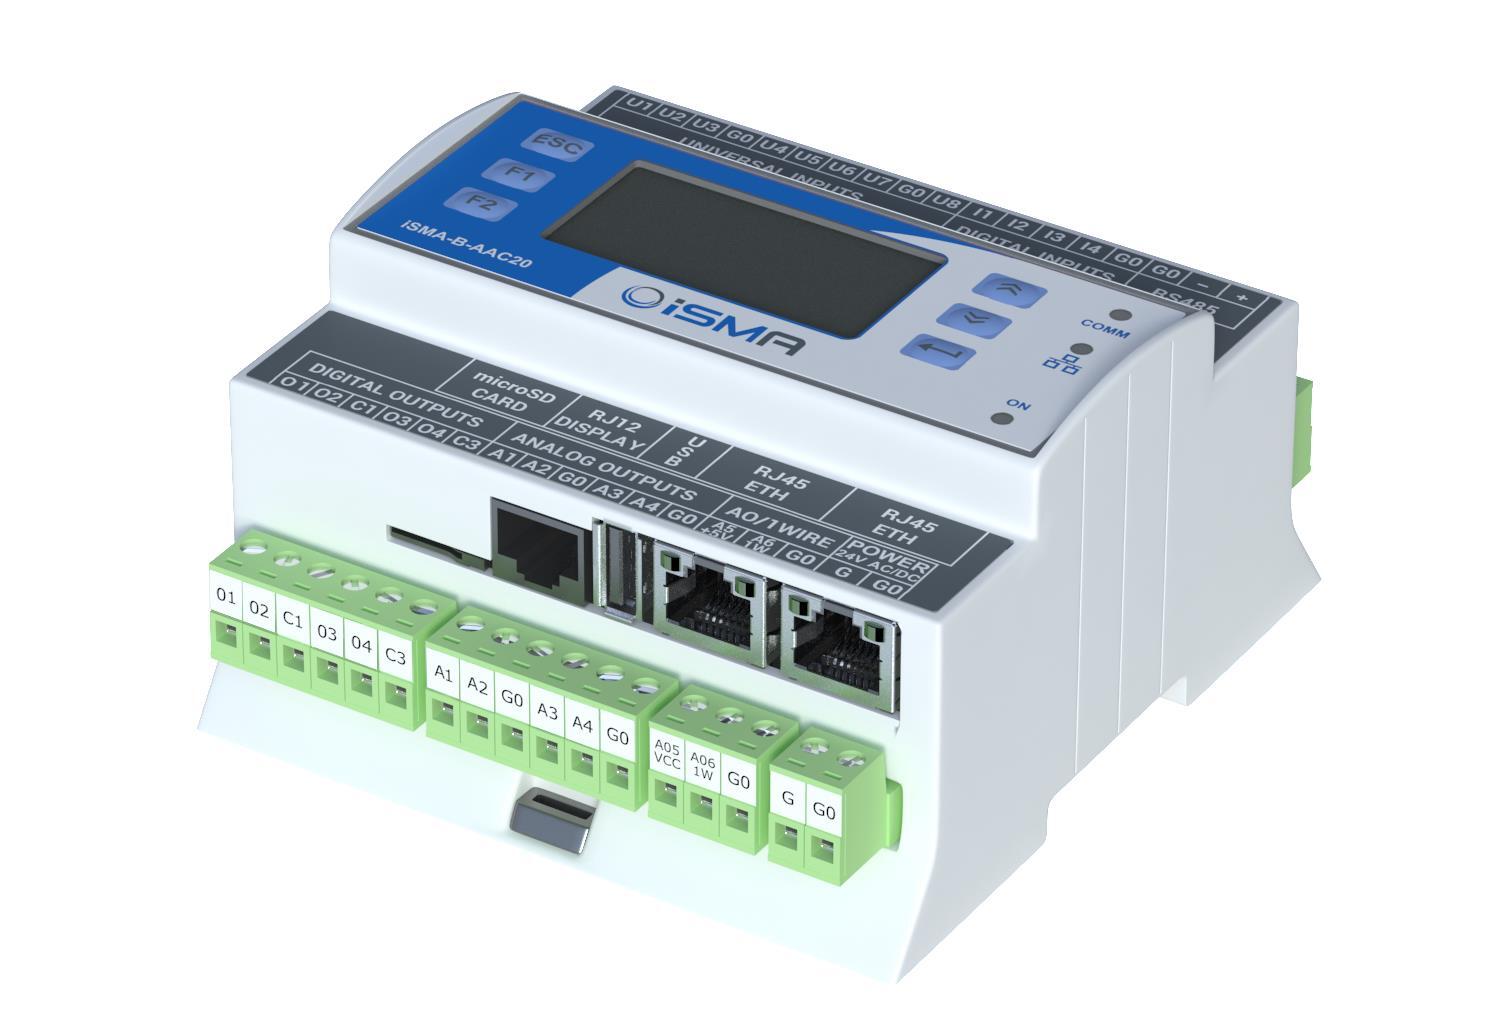 iSMA B-AAC20 Sedona Advanced Application Controller with LCD Display